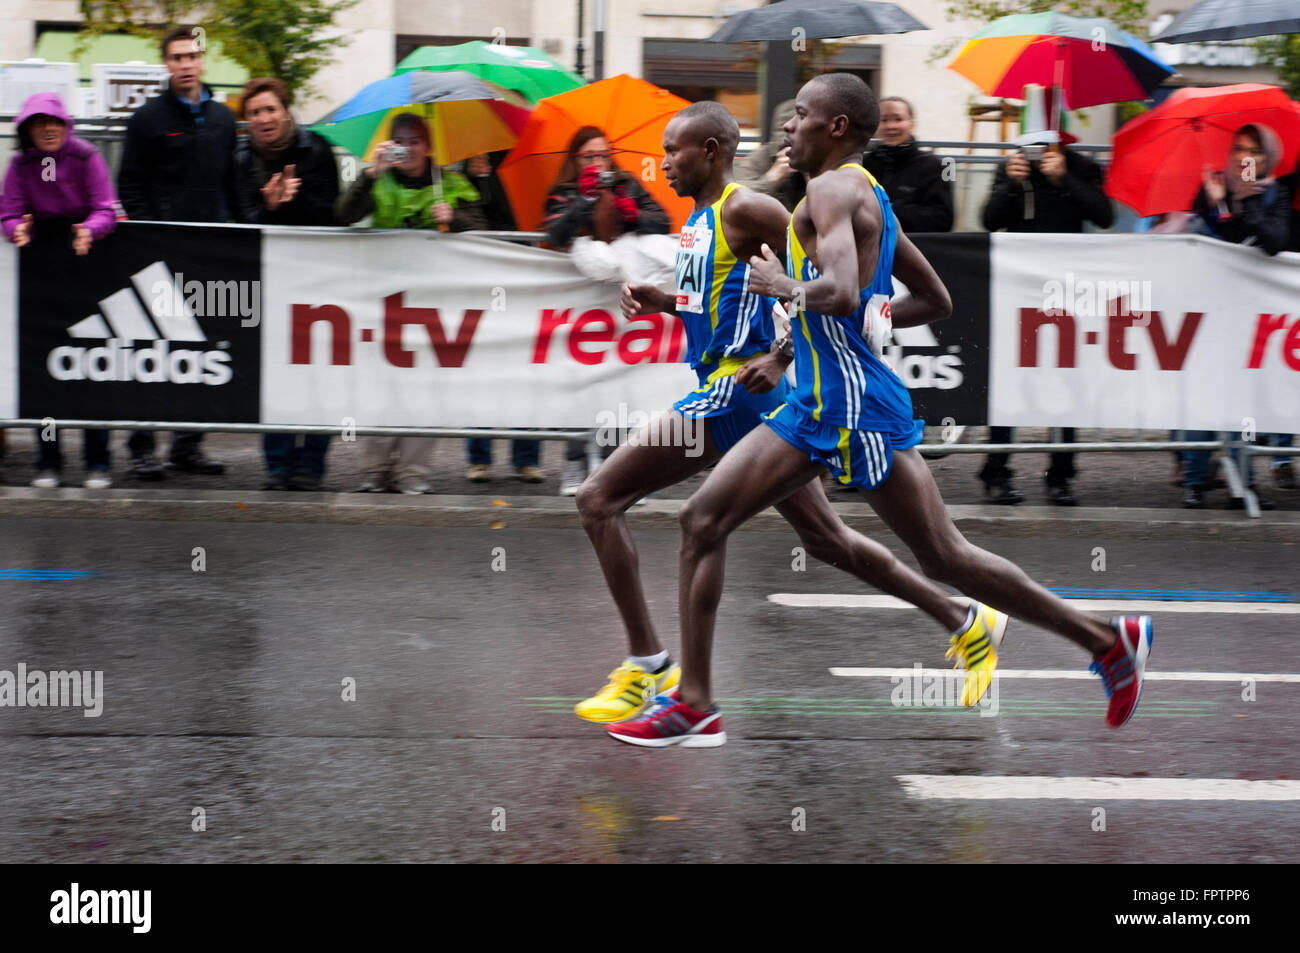 Bmw berlin marathon hi-res stock photography and images - Alamy